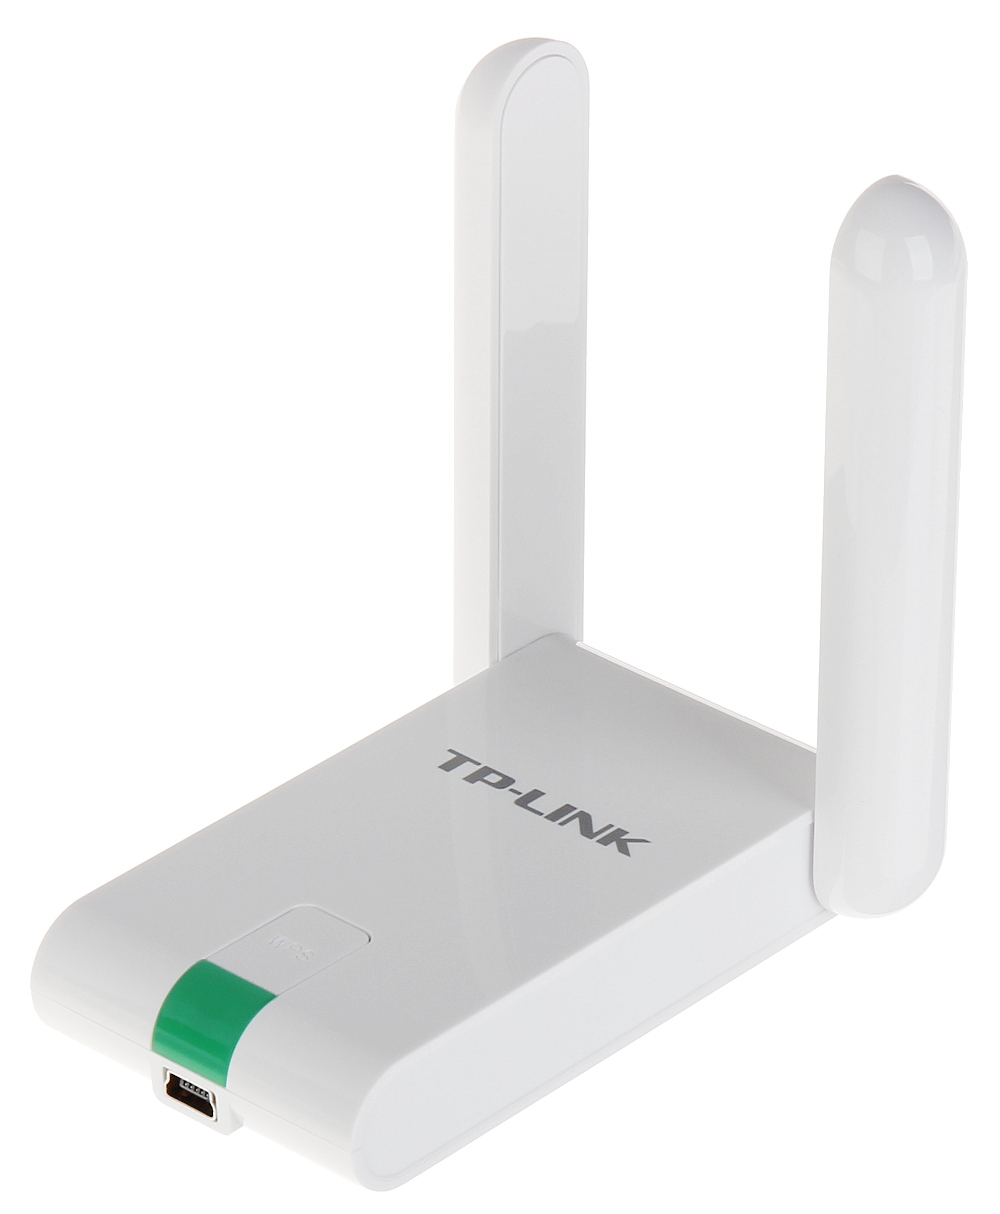 Bán USB WIFI TP-LINK TL-WN822N giá rẻ